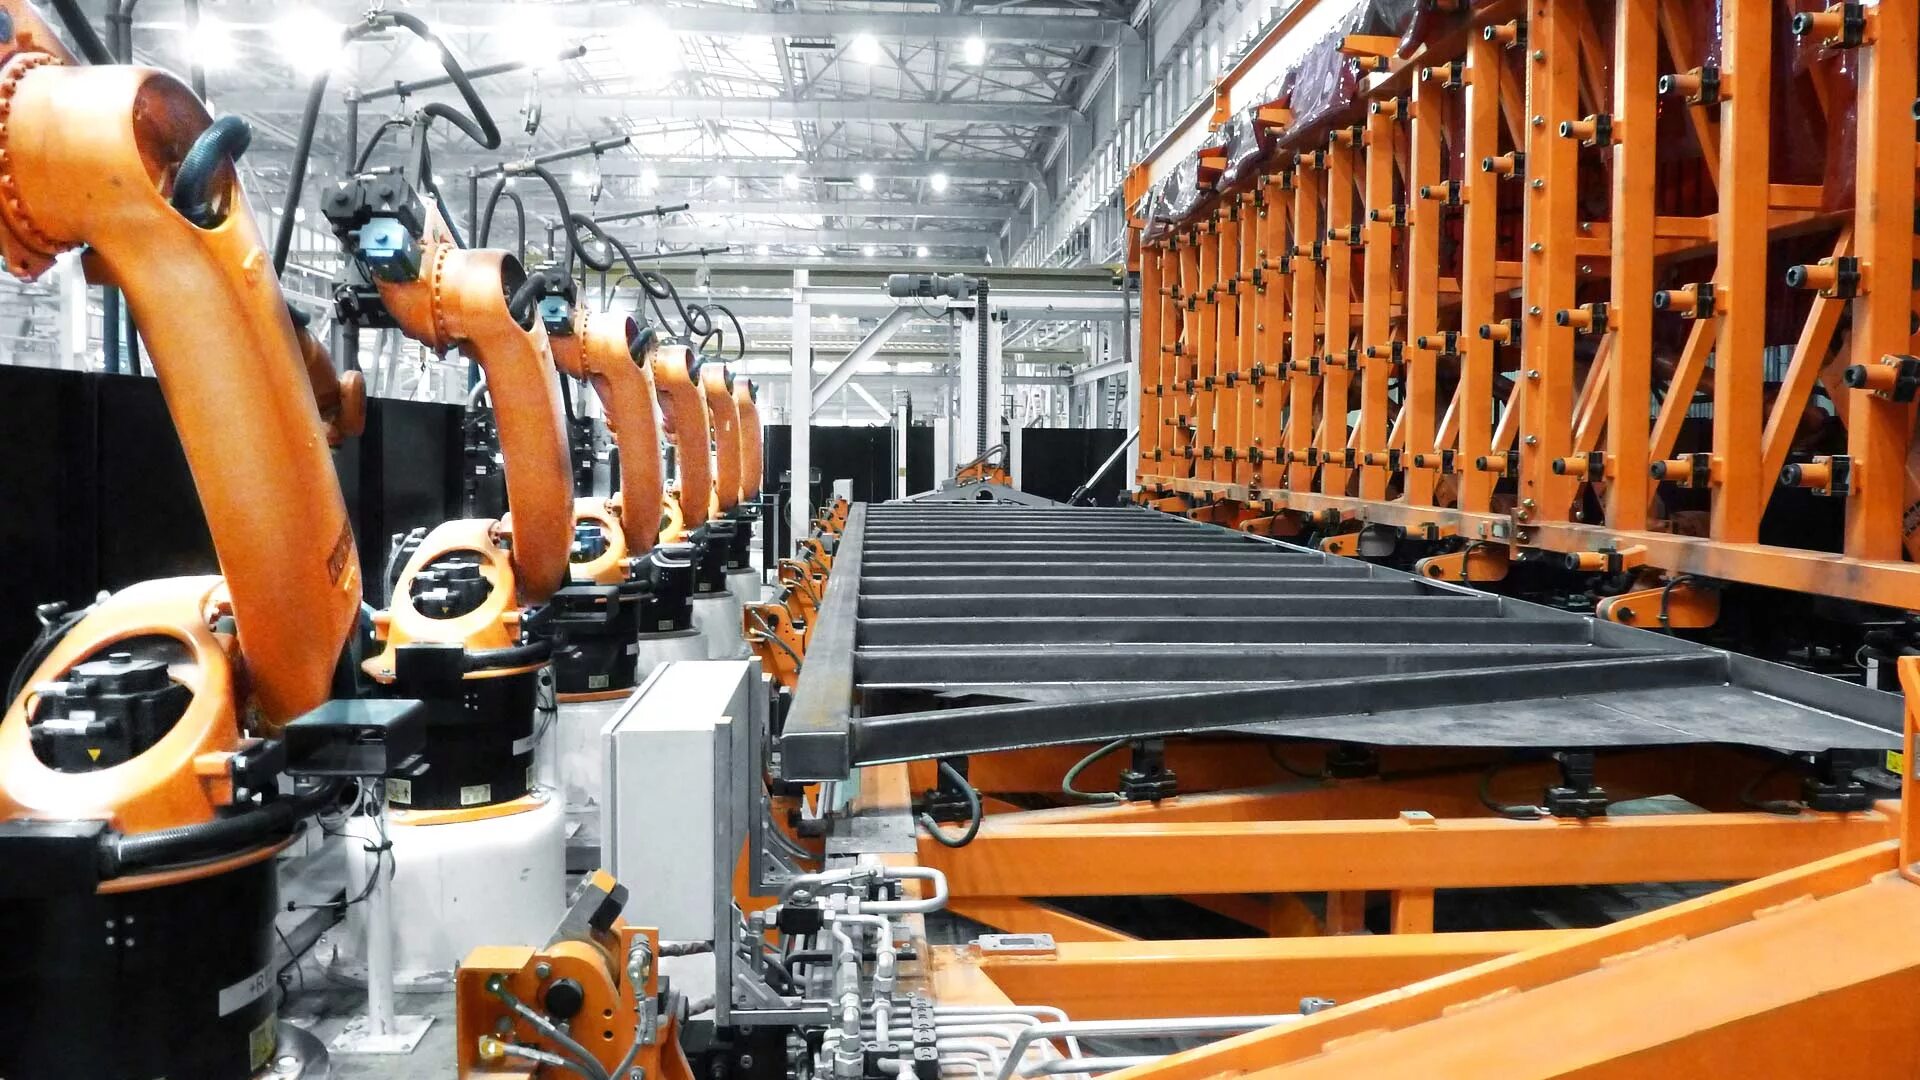 Робот конвейер kuka. Завод фабрика kuka в Германии. Kuka Германия Дельта робот. Машиностроение.